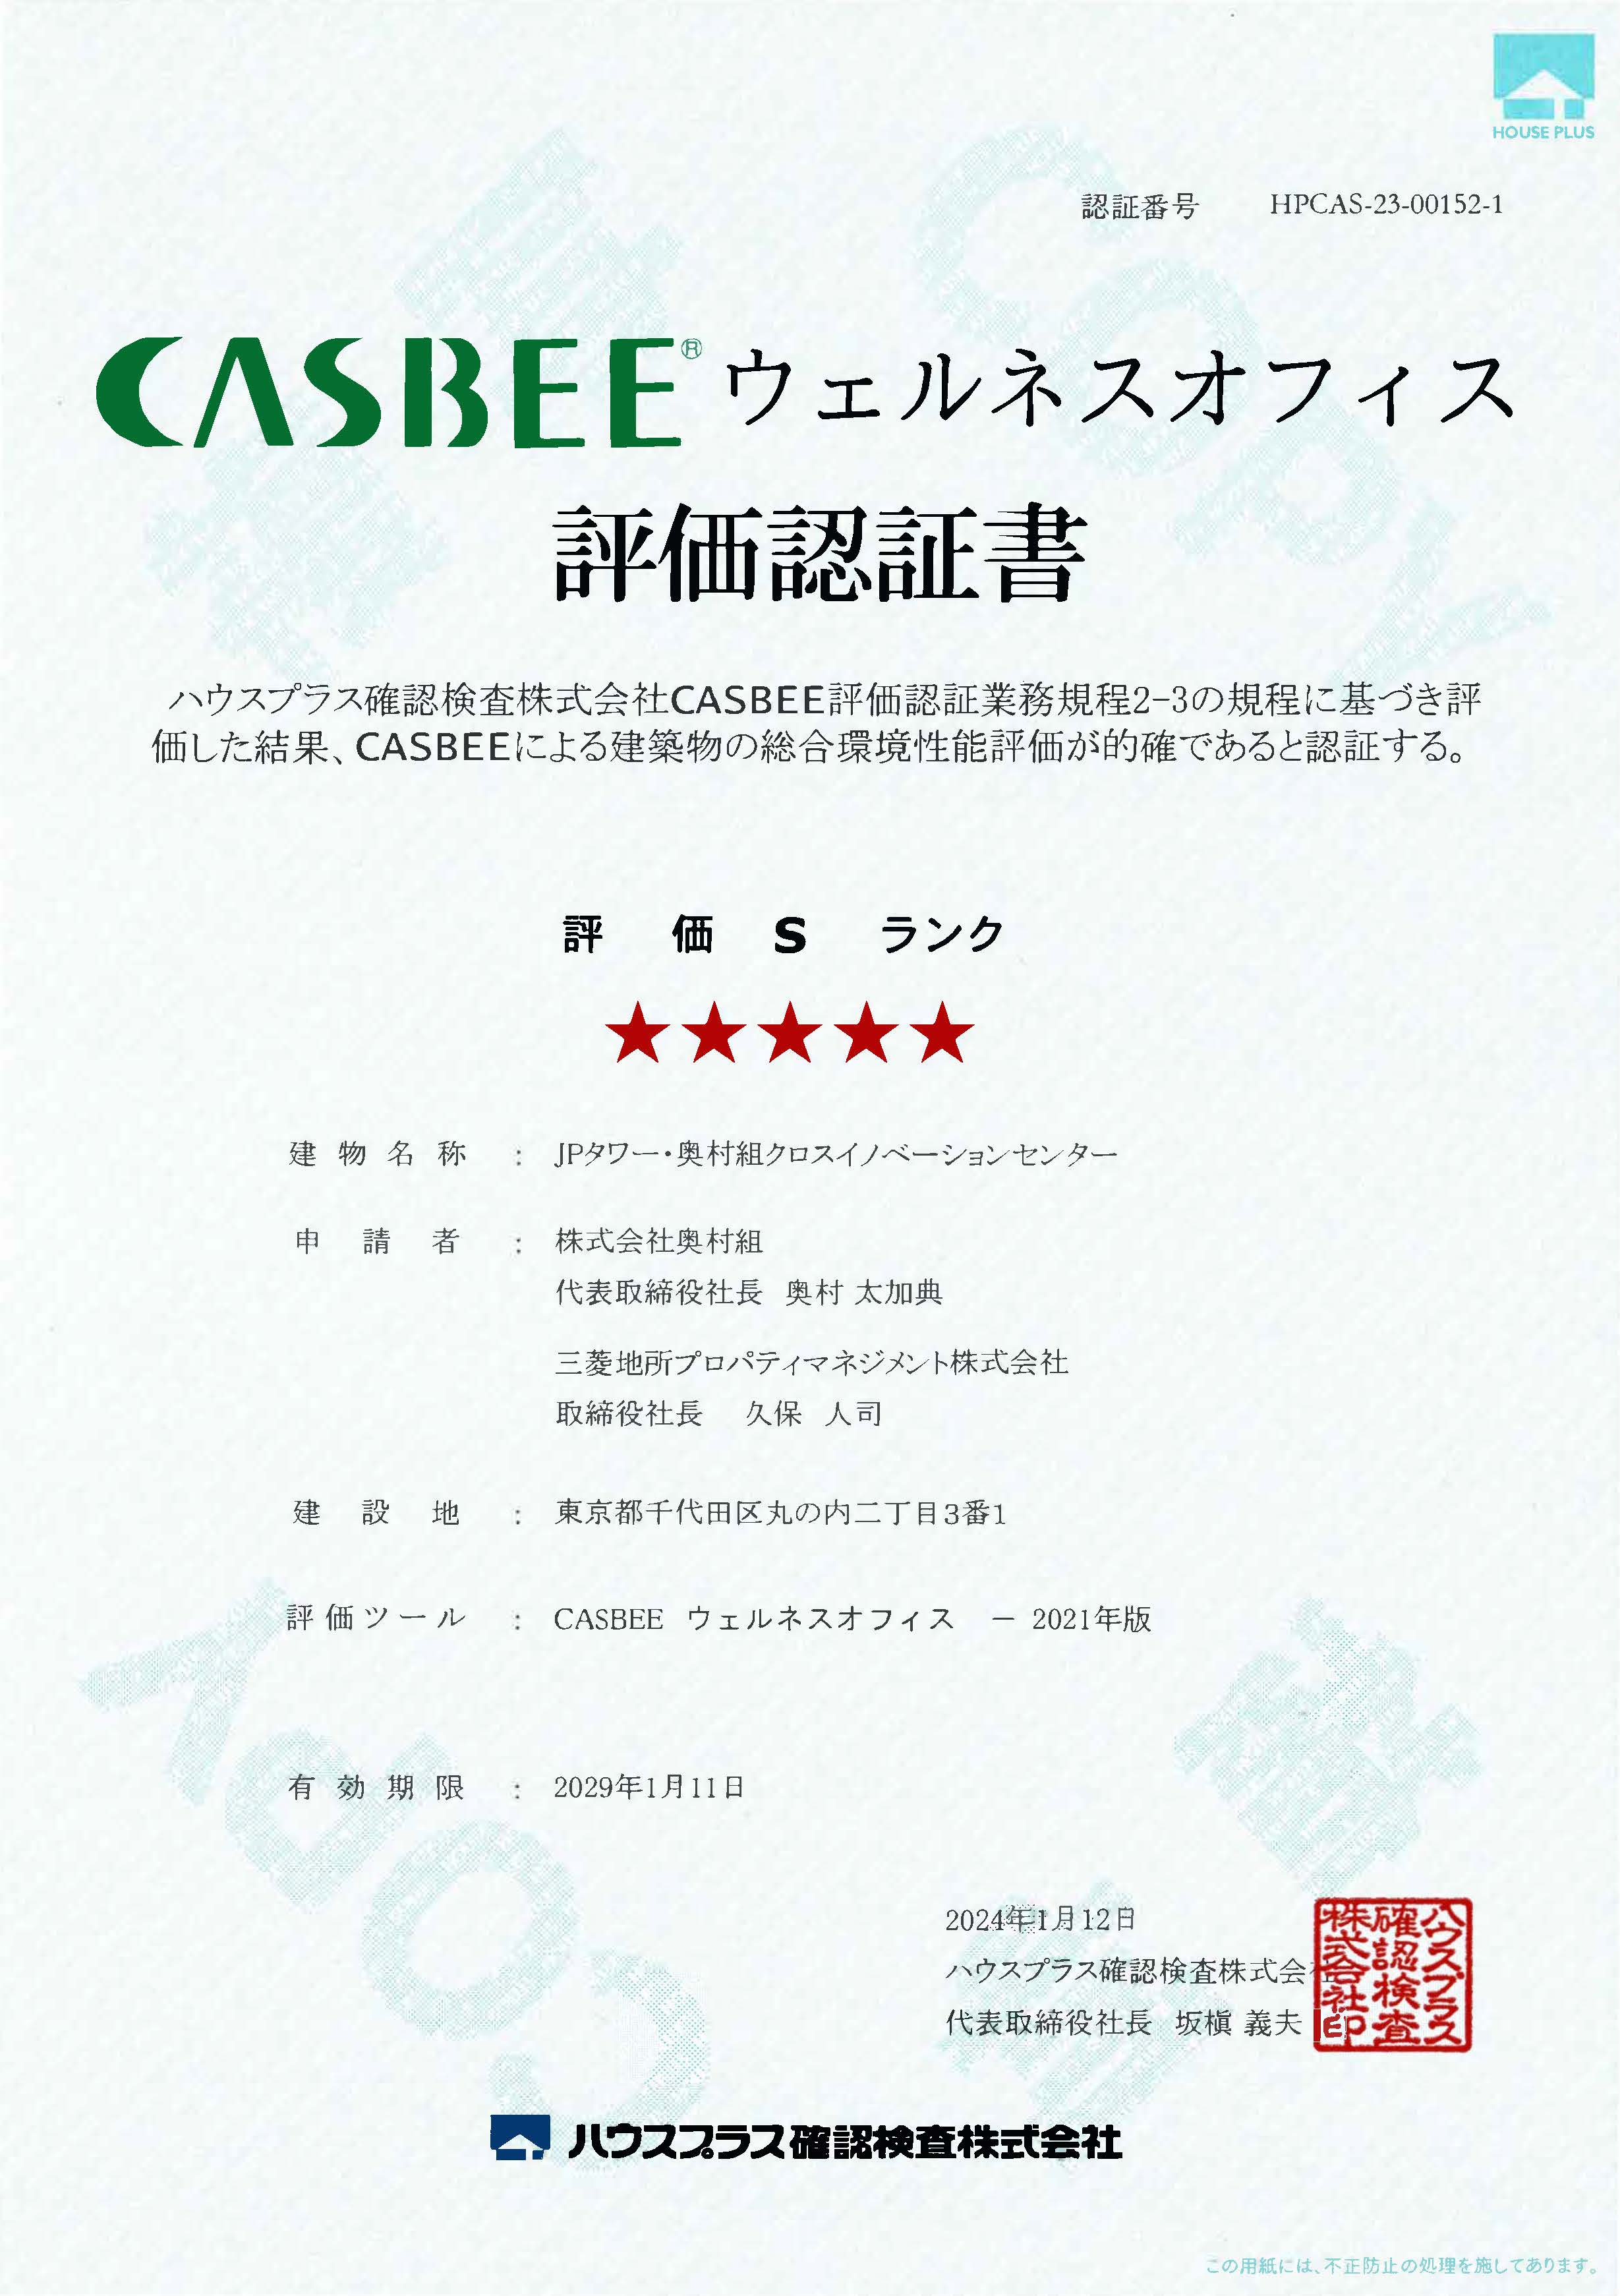 CASBEE-WO認証書＋評価結果(JPタワー・奥村組クロスイノベーションセンター).jpg